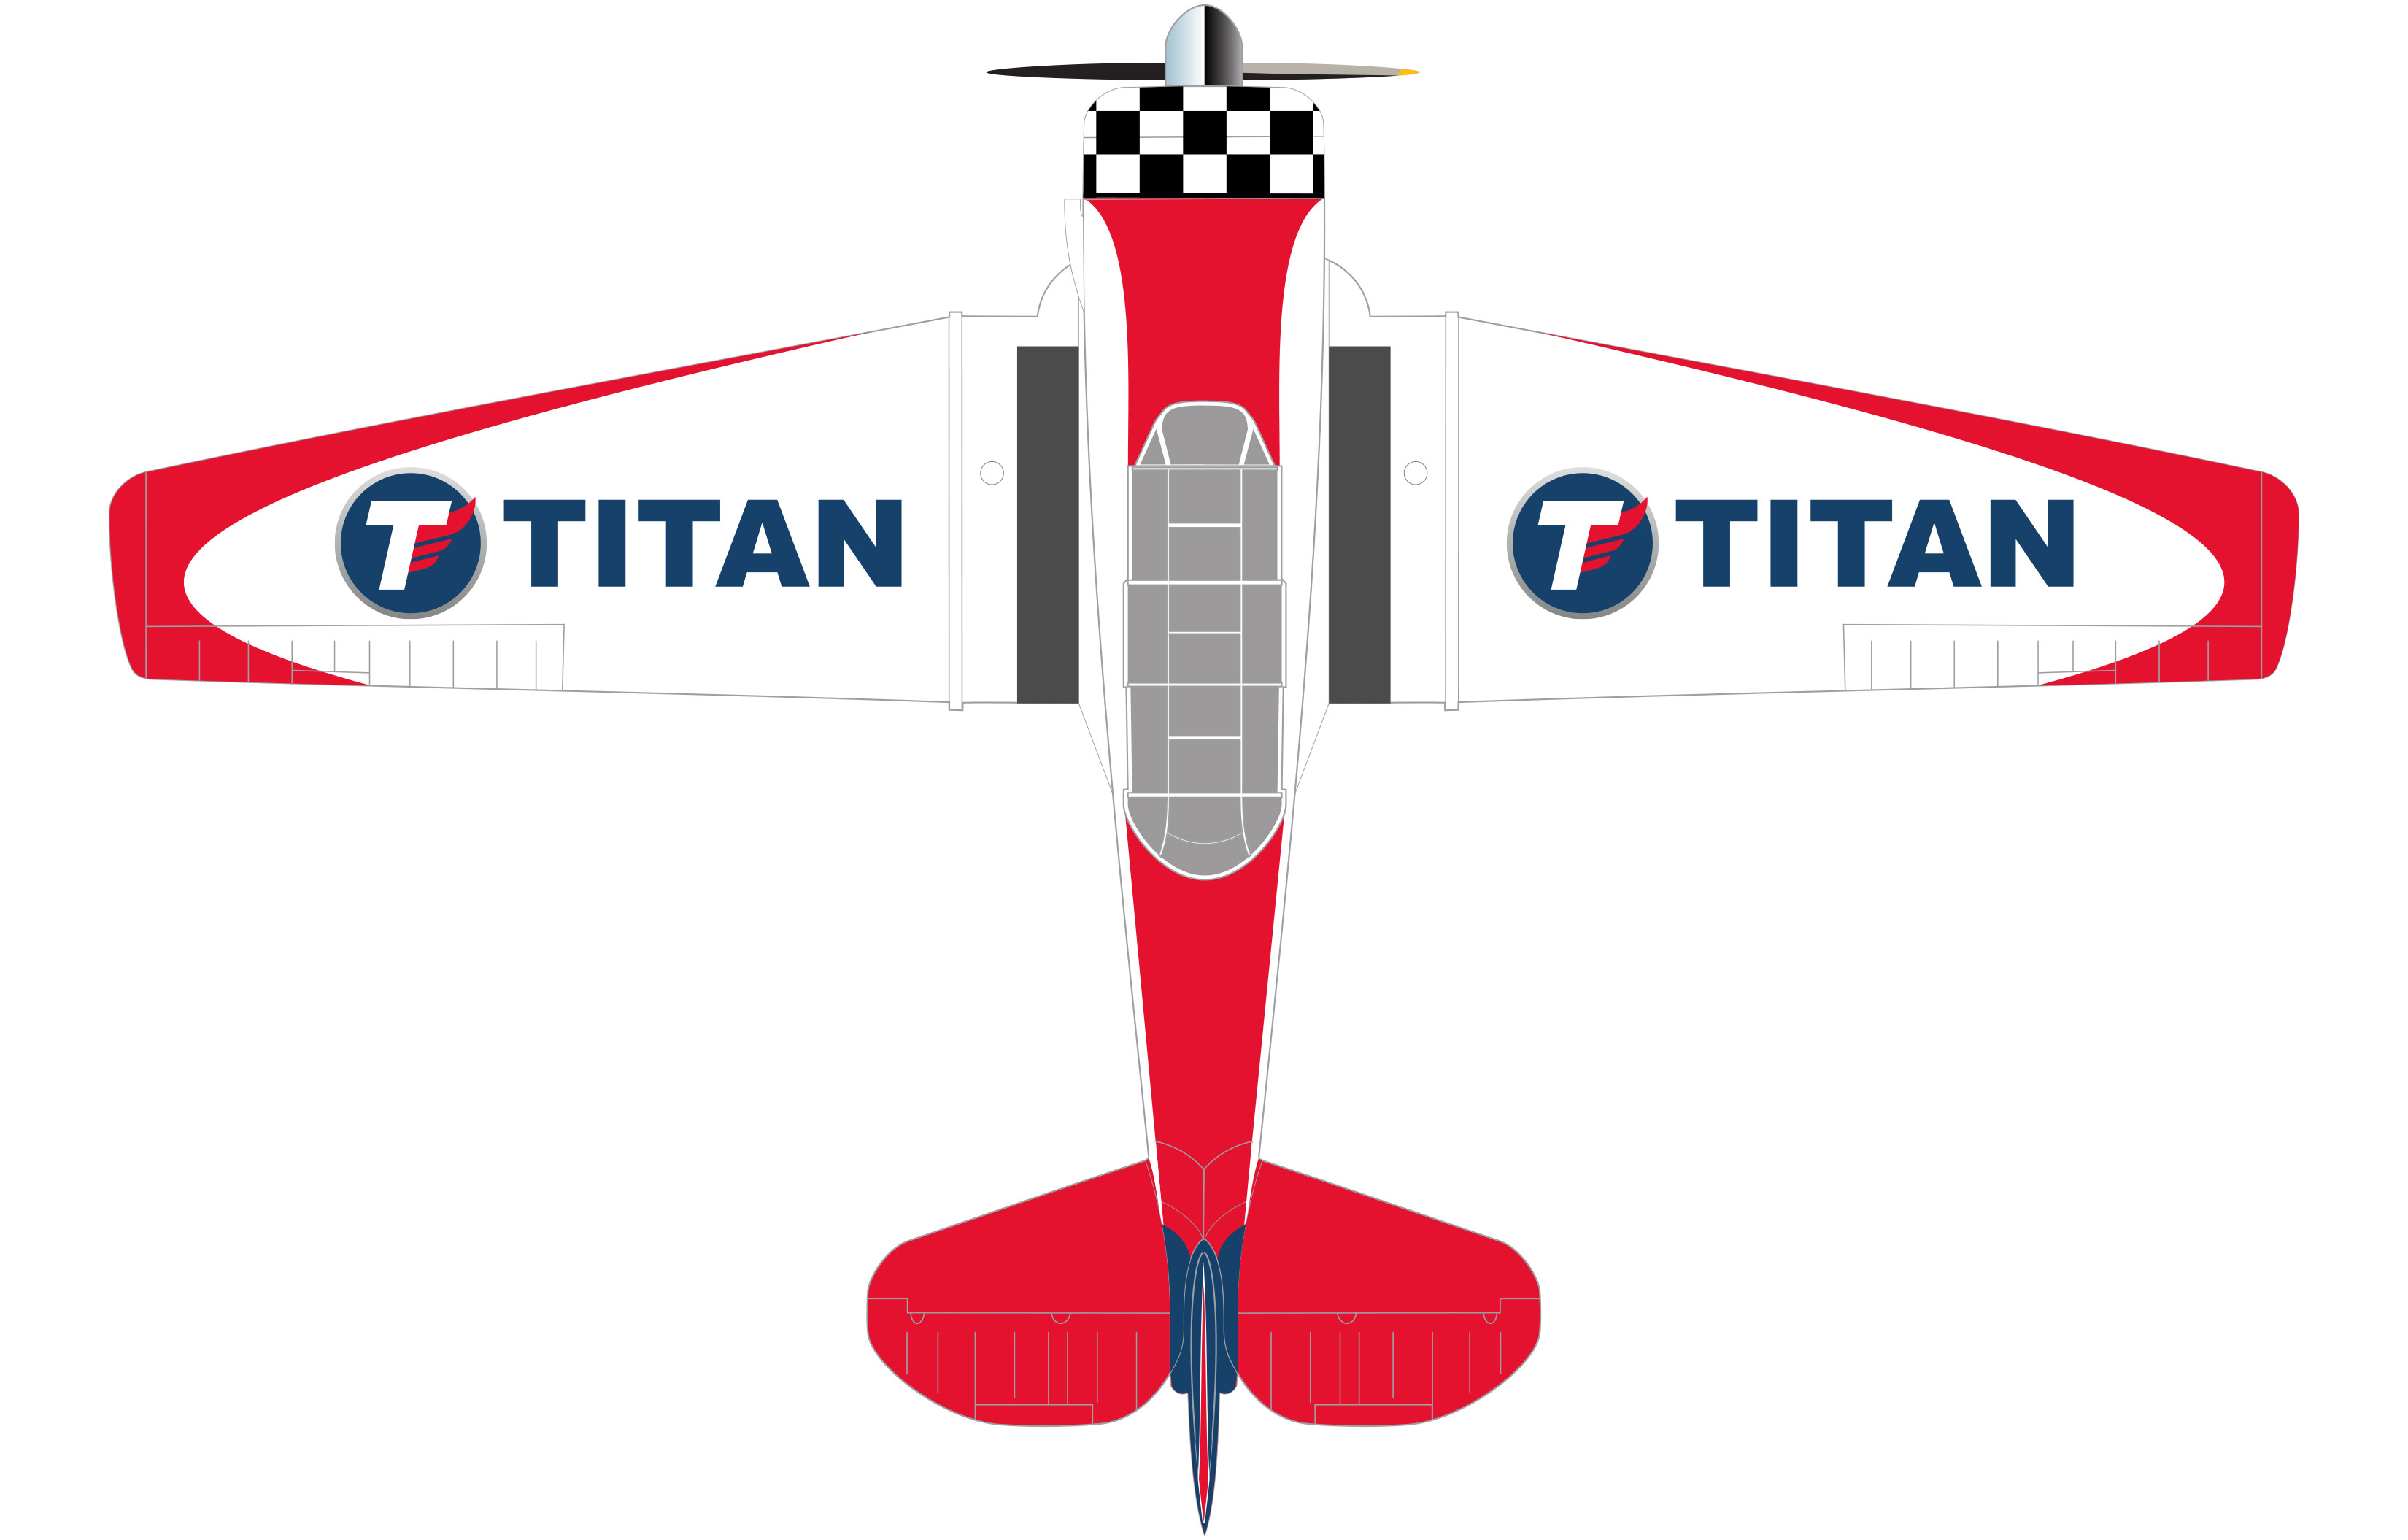 titan aerobatic team plane rendering